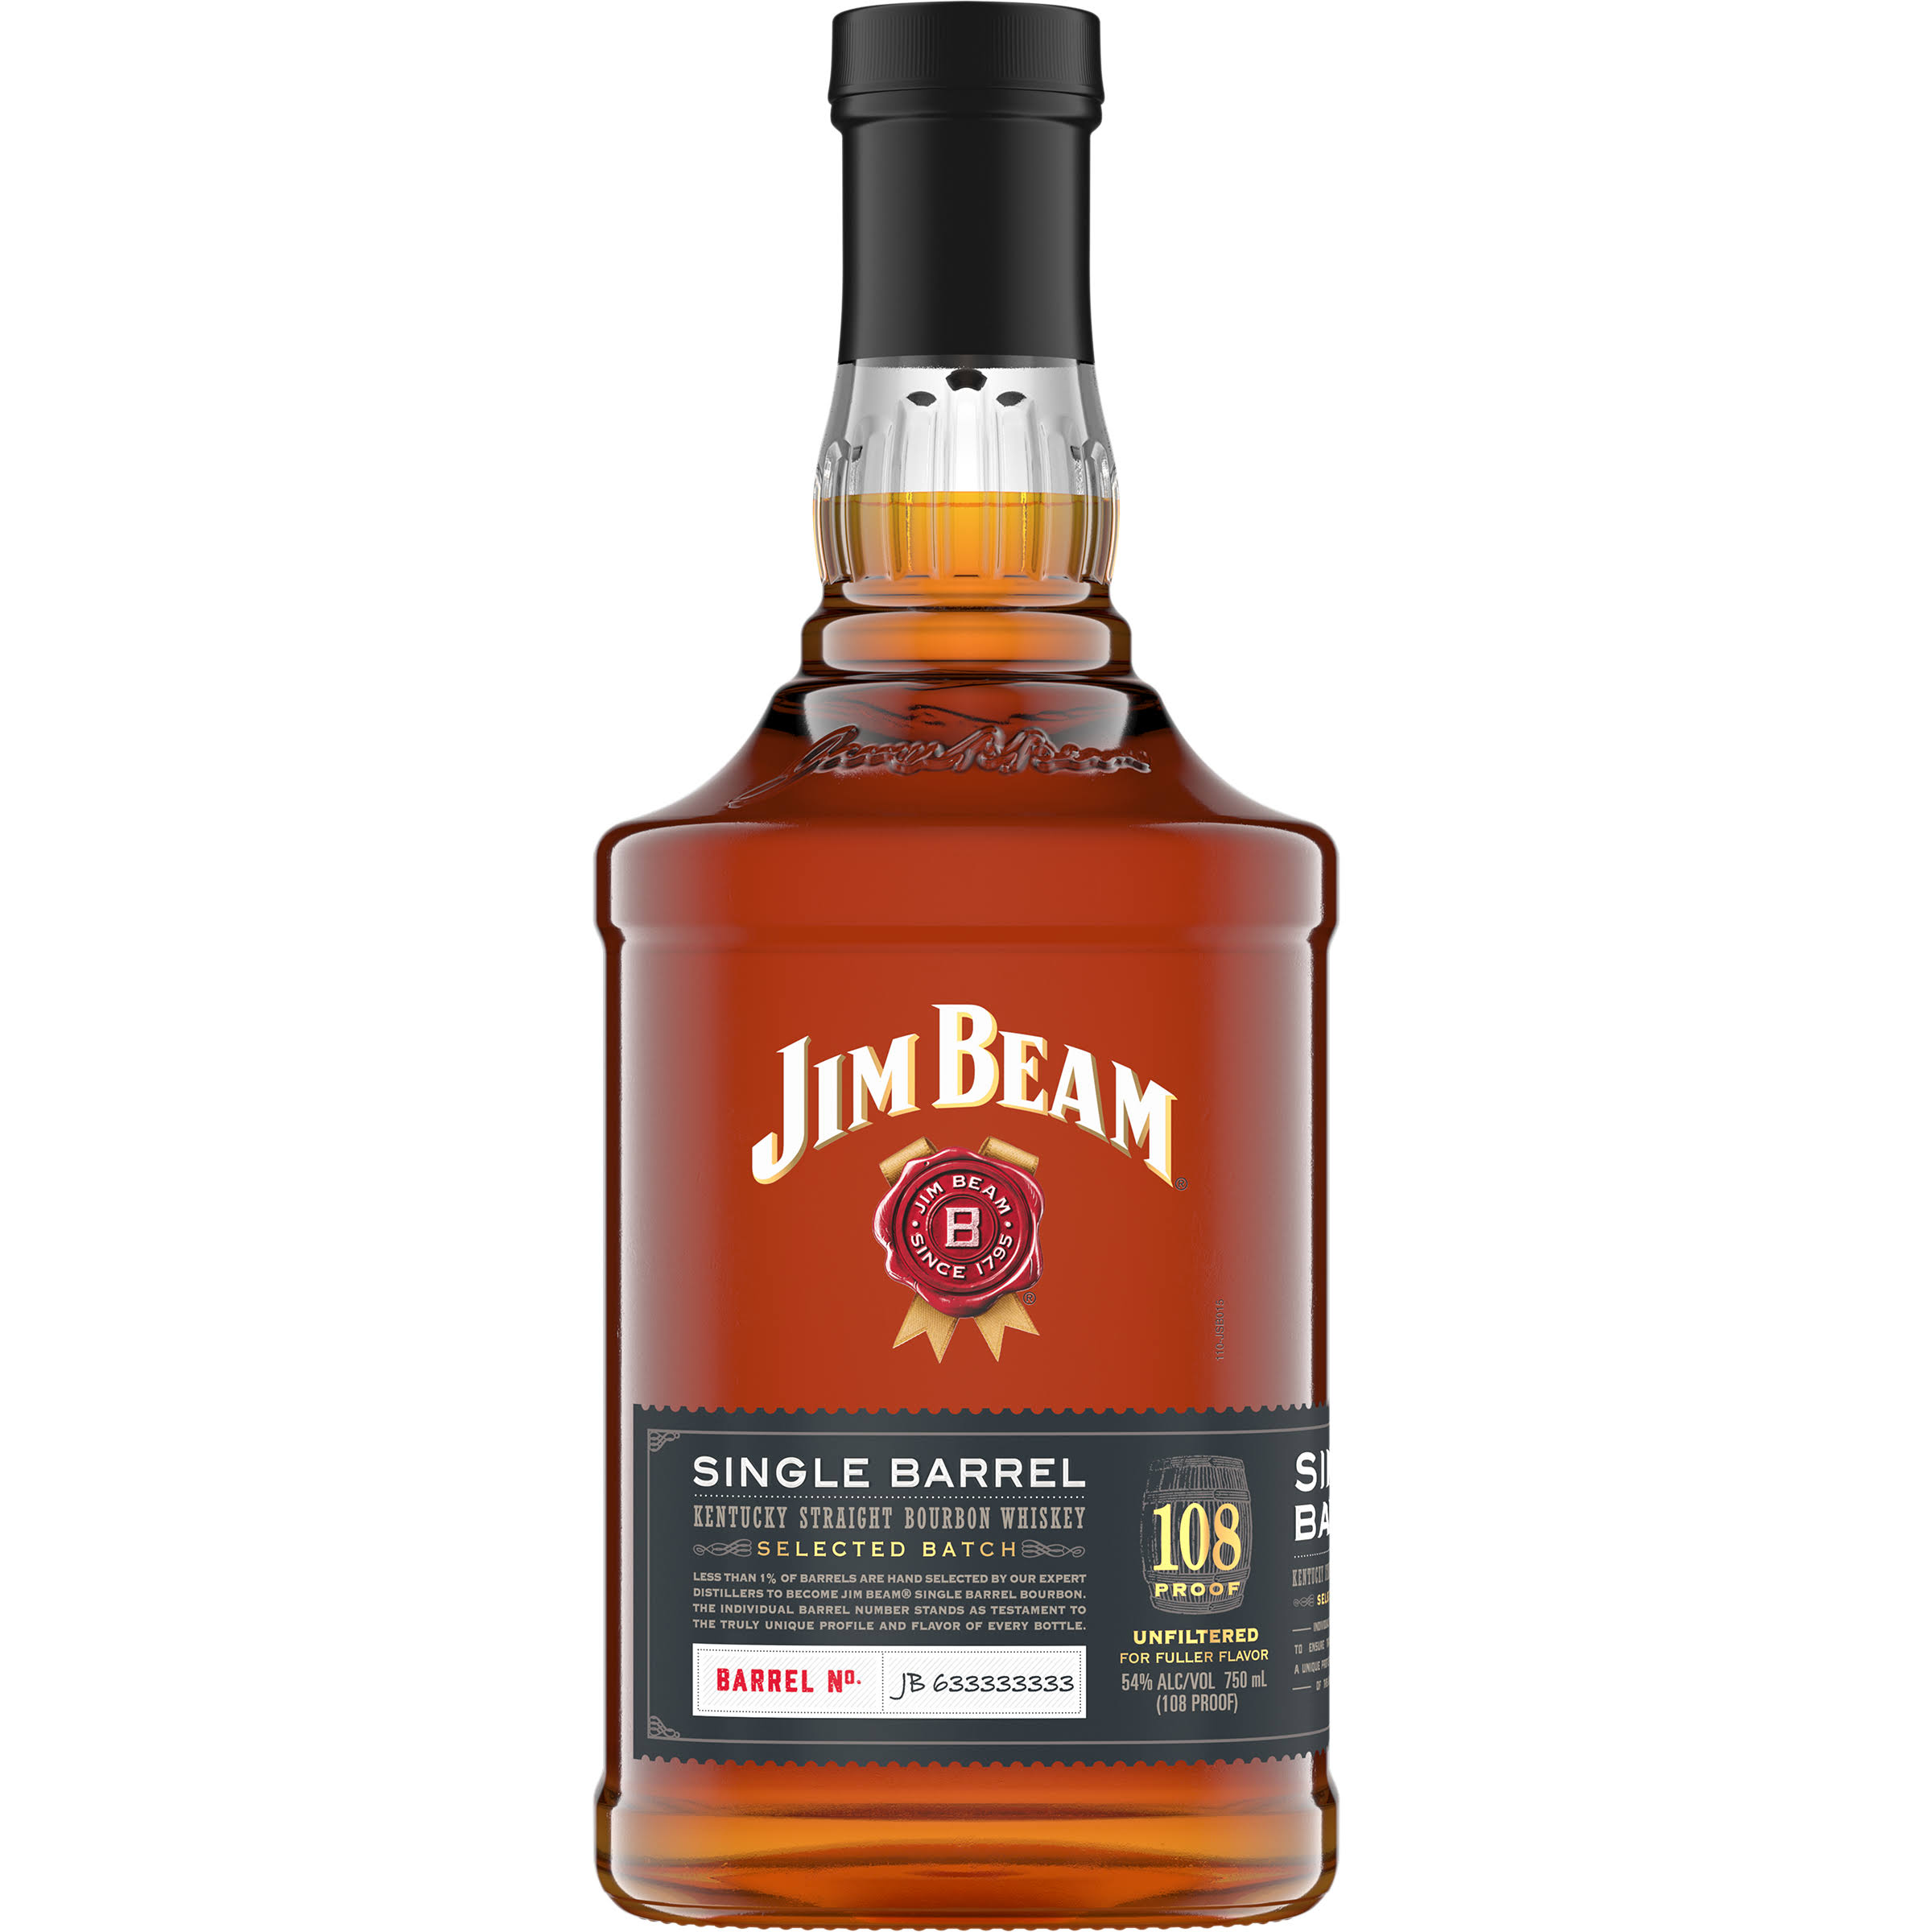 Jim Beam Single Barrel 108 Proof 54% Kentucky Bourbon Whiskey 750ml